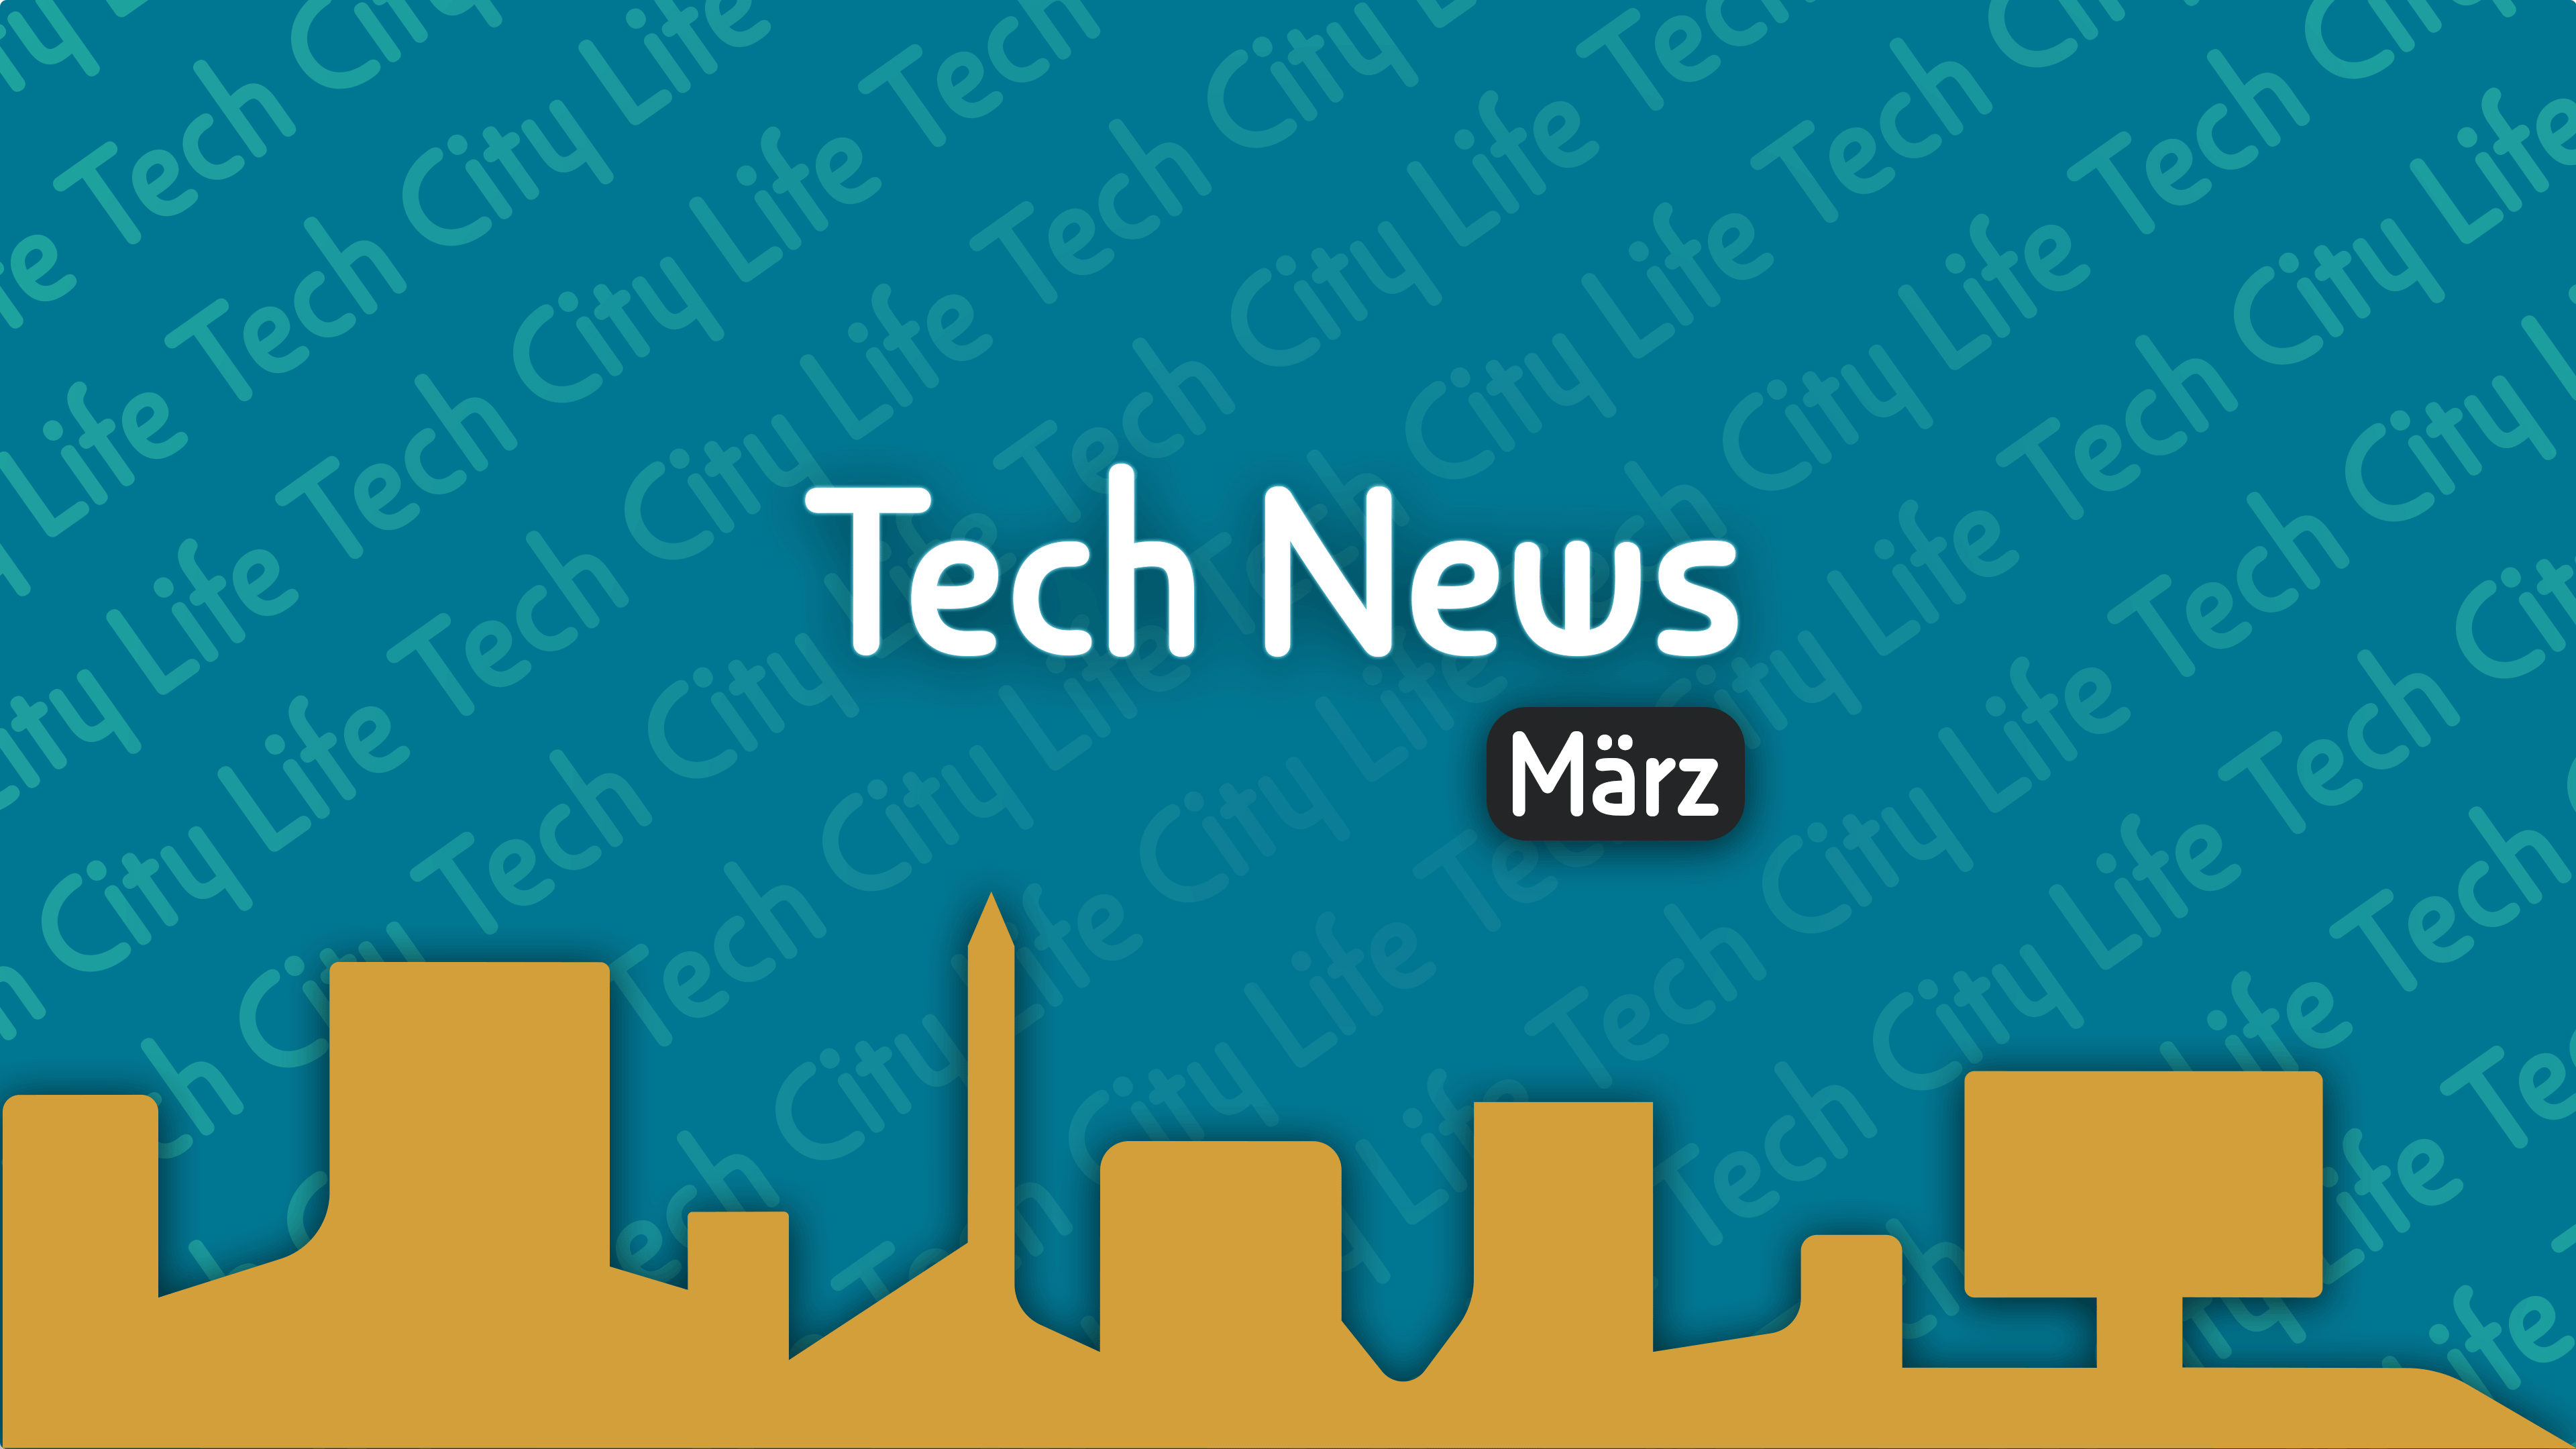 Tech News März